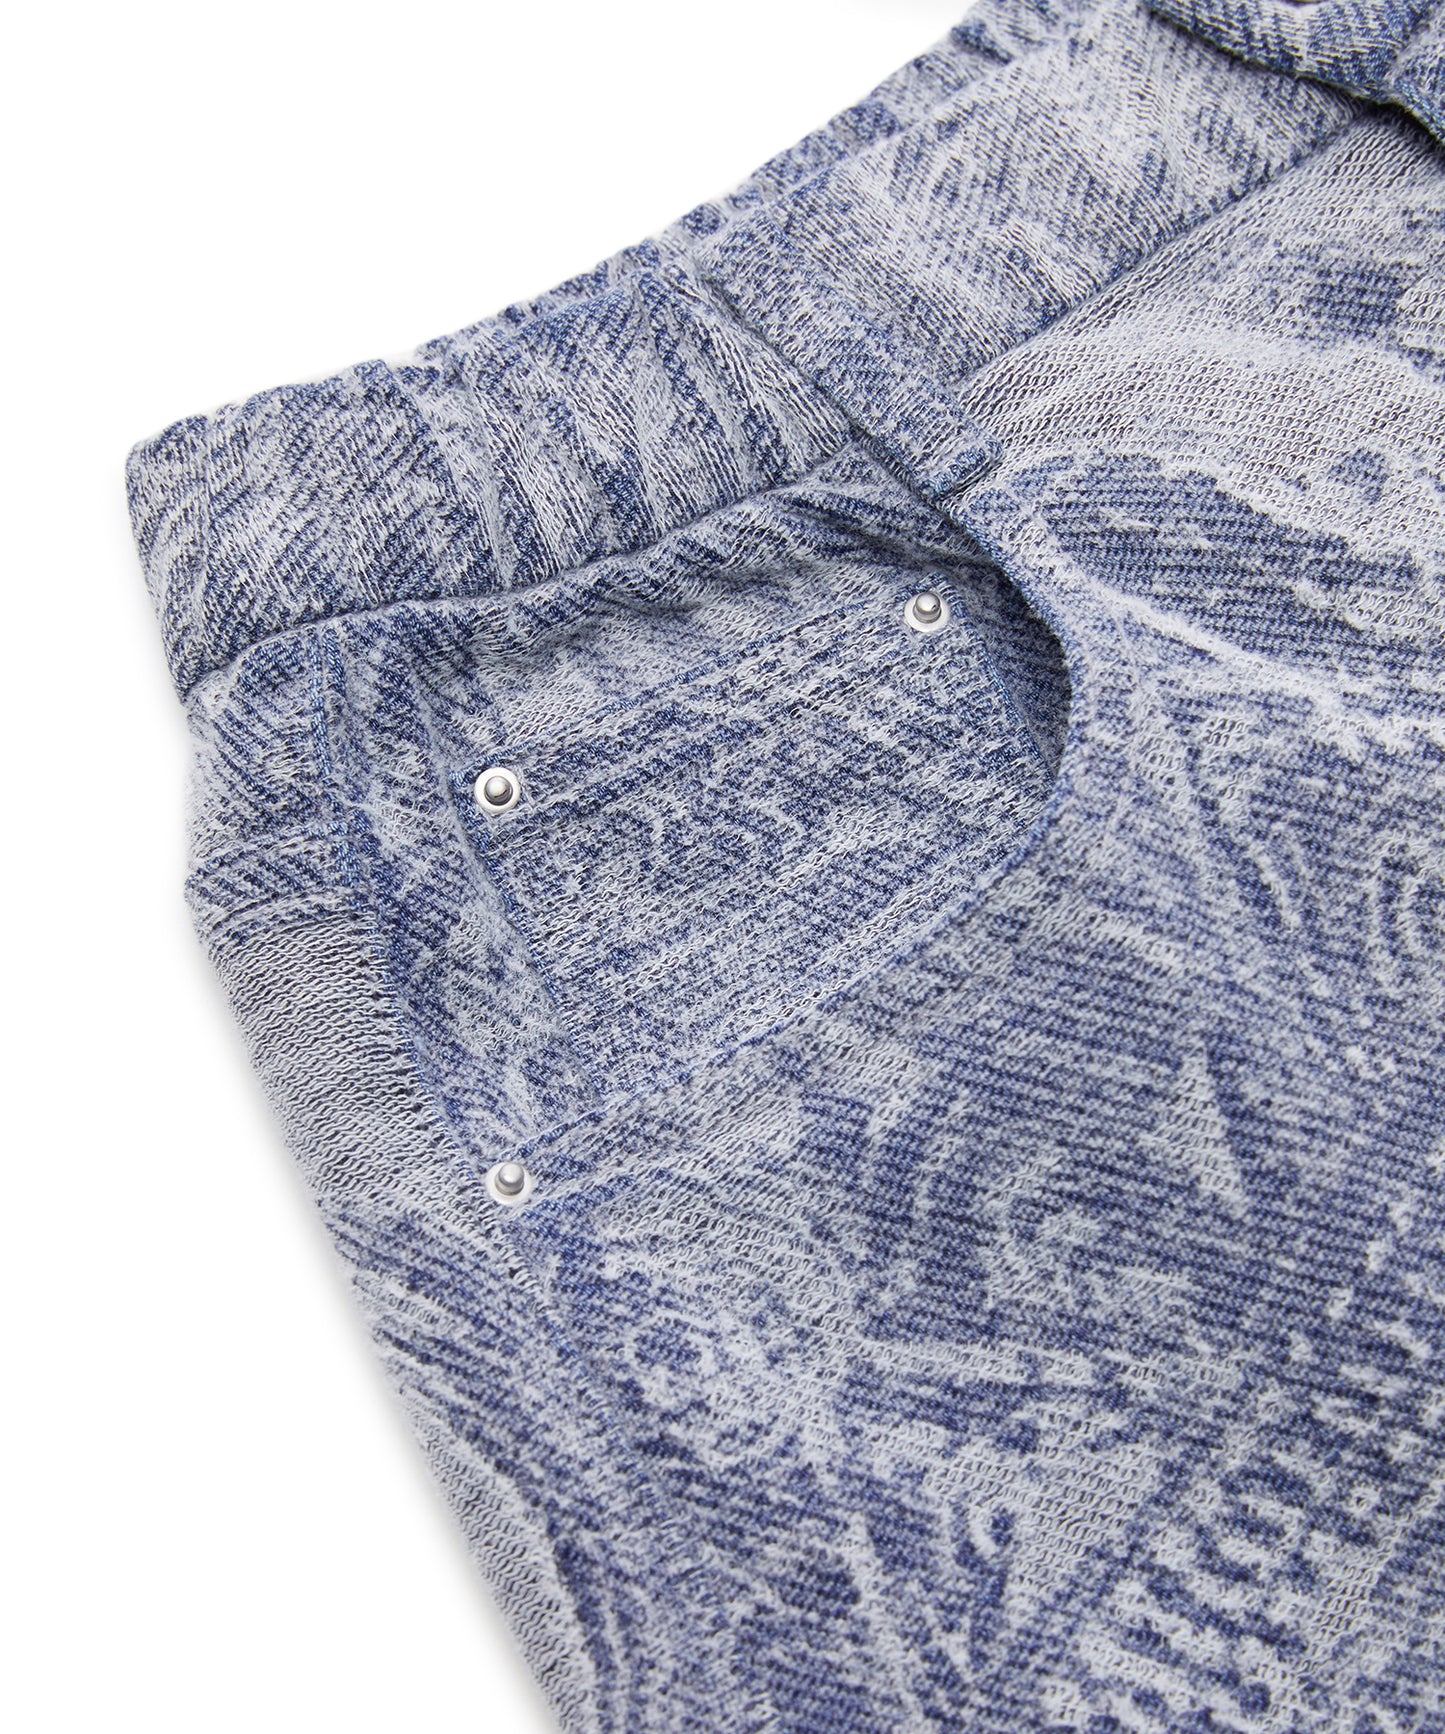 Heart and Rabbit Motif-jacquard jeans